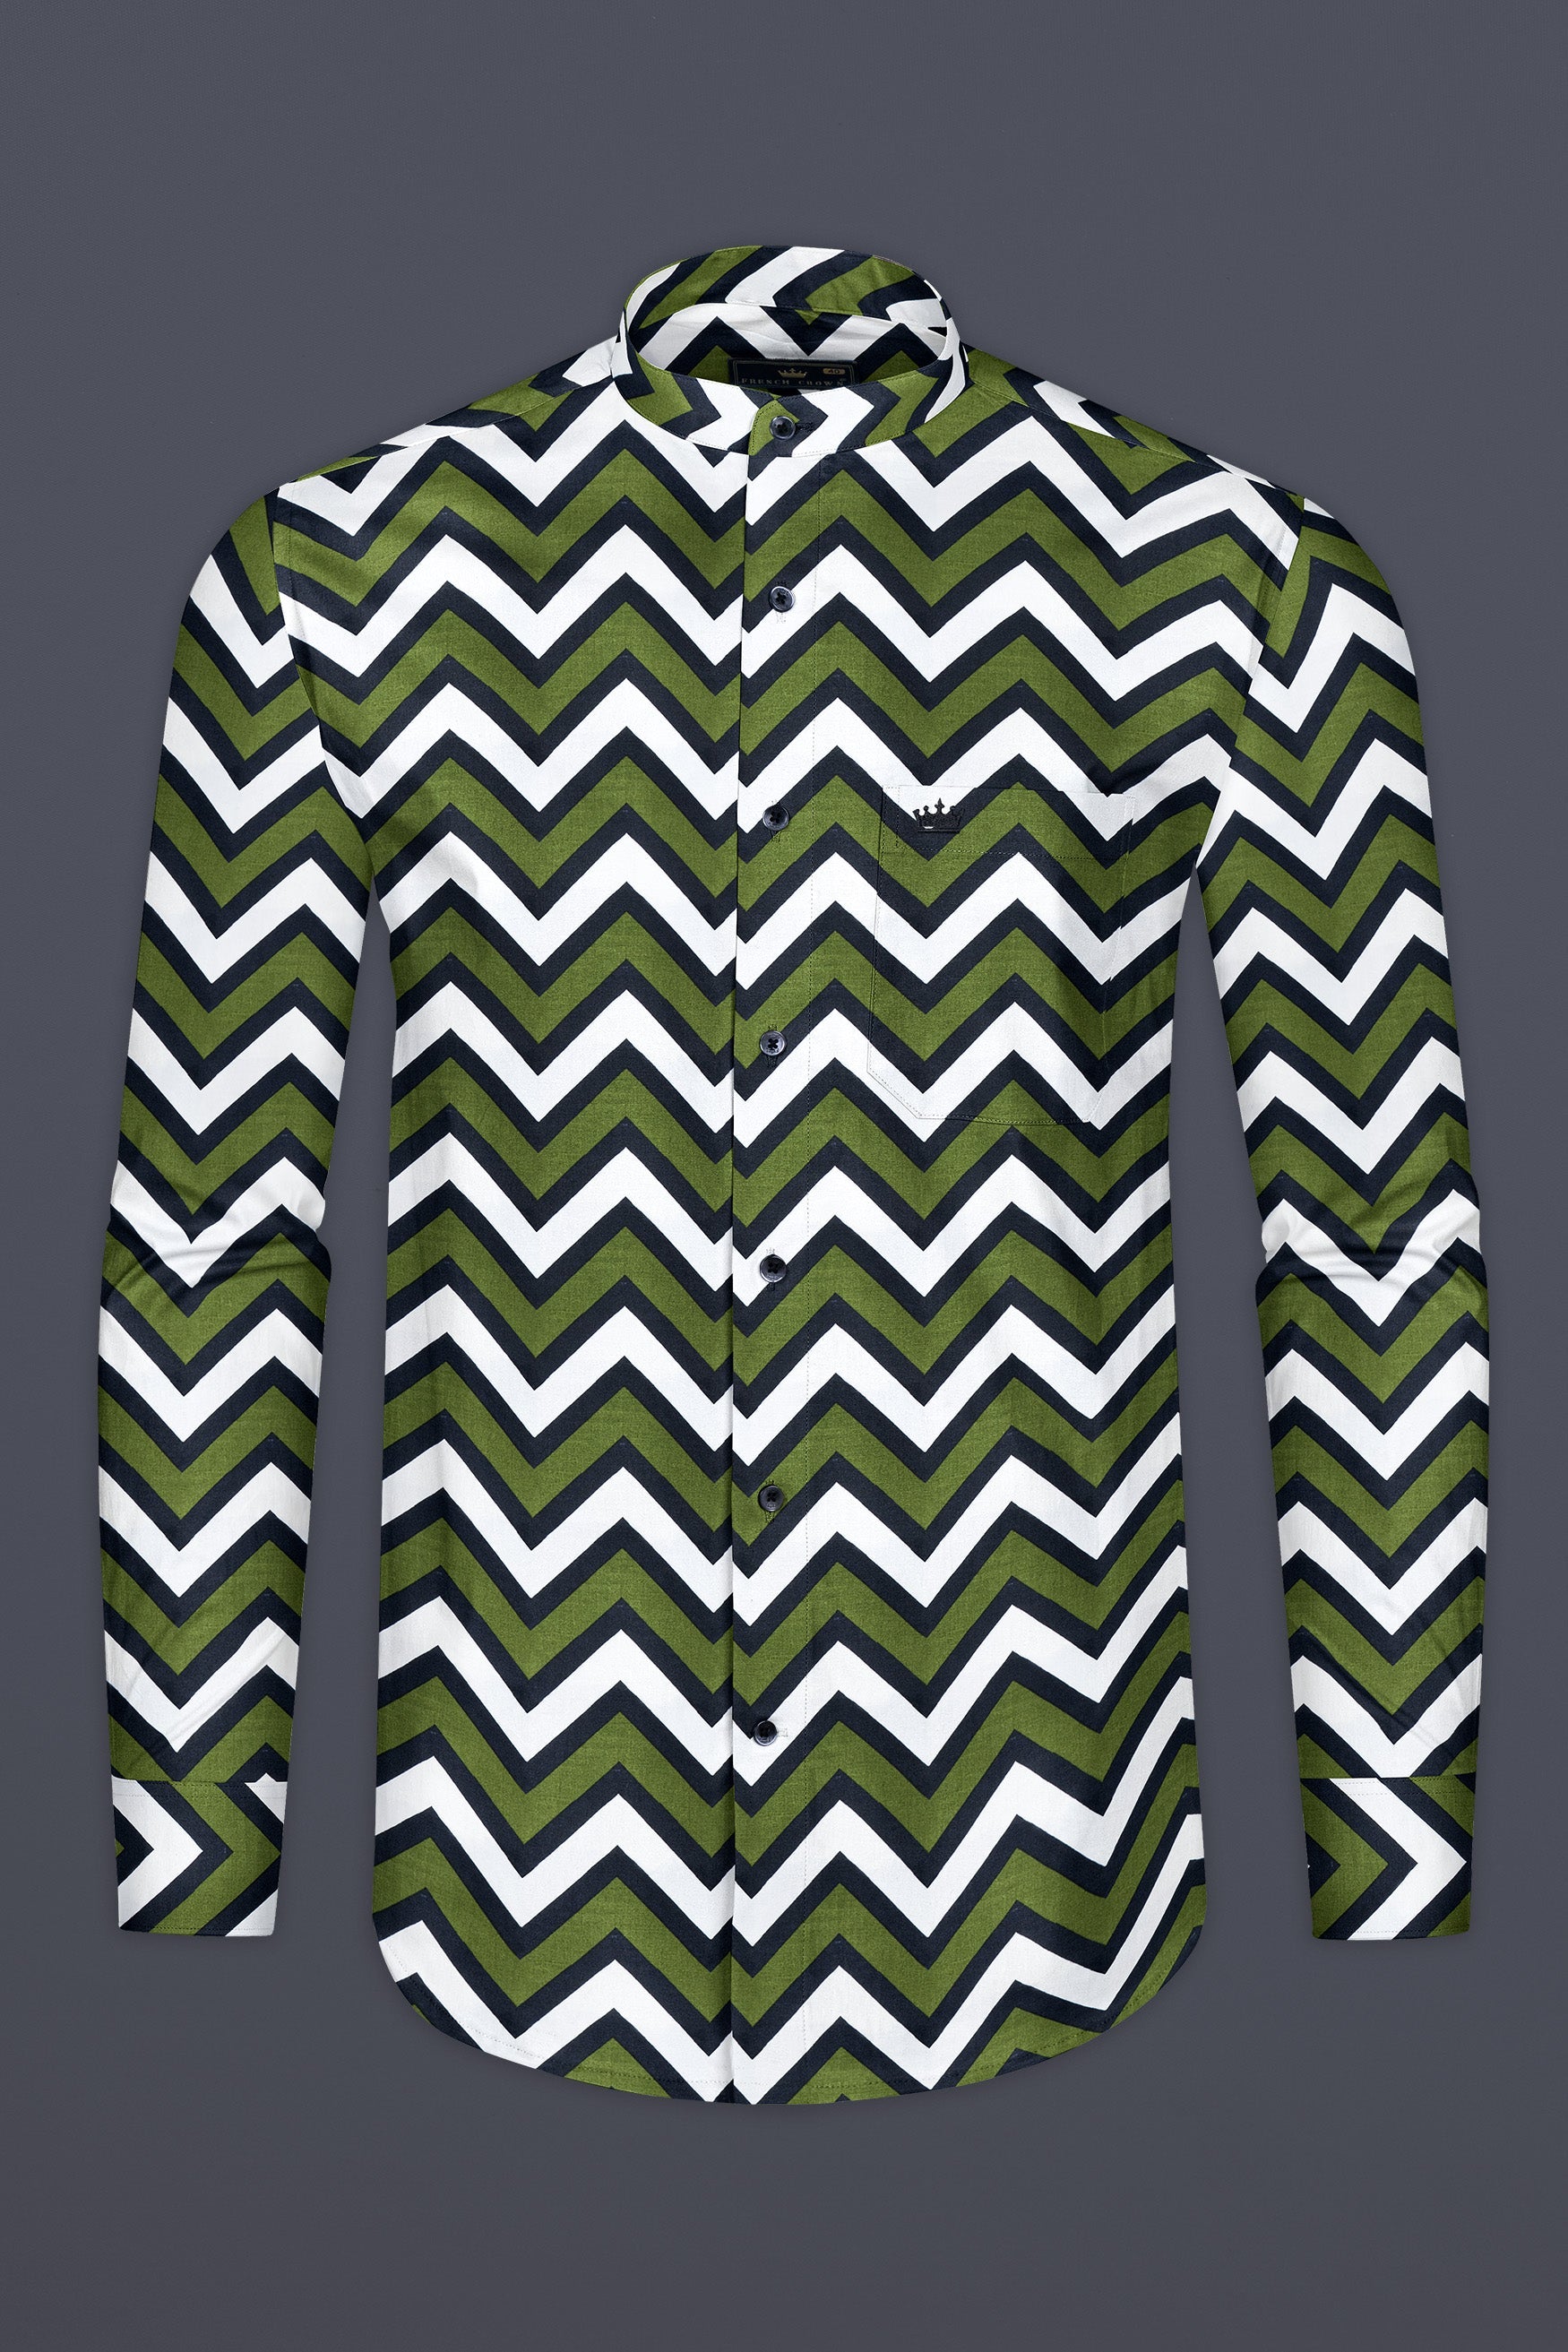 Finch Green And Cinder Black Chevron Prints Super Soft Premium Cotton Designer Shirt